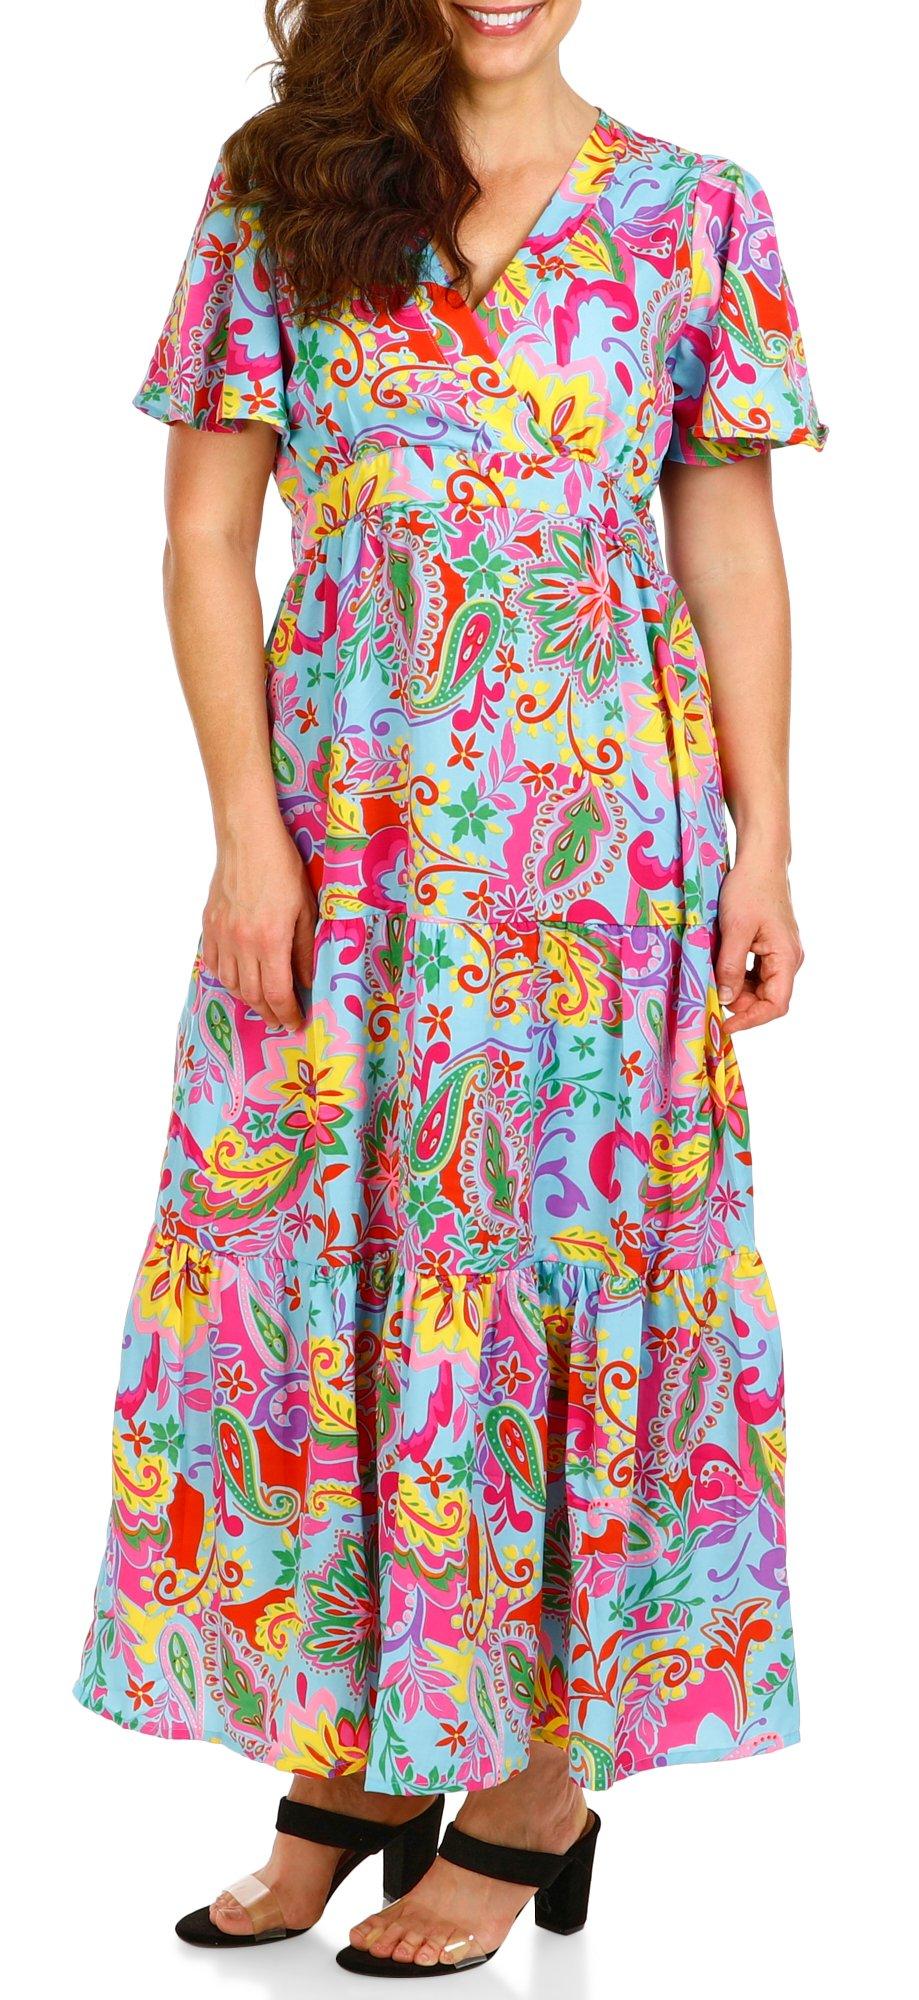 Women's Floral Paisley Print Dress